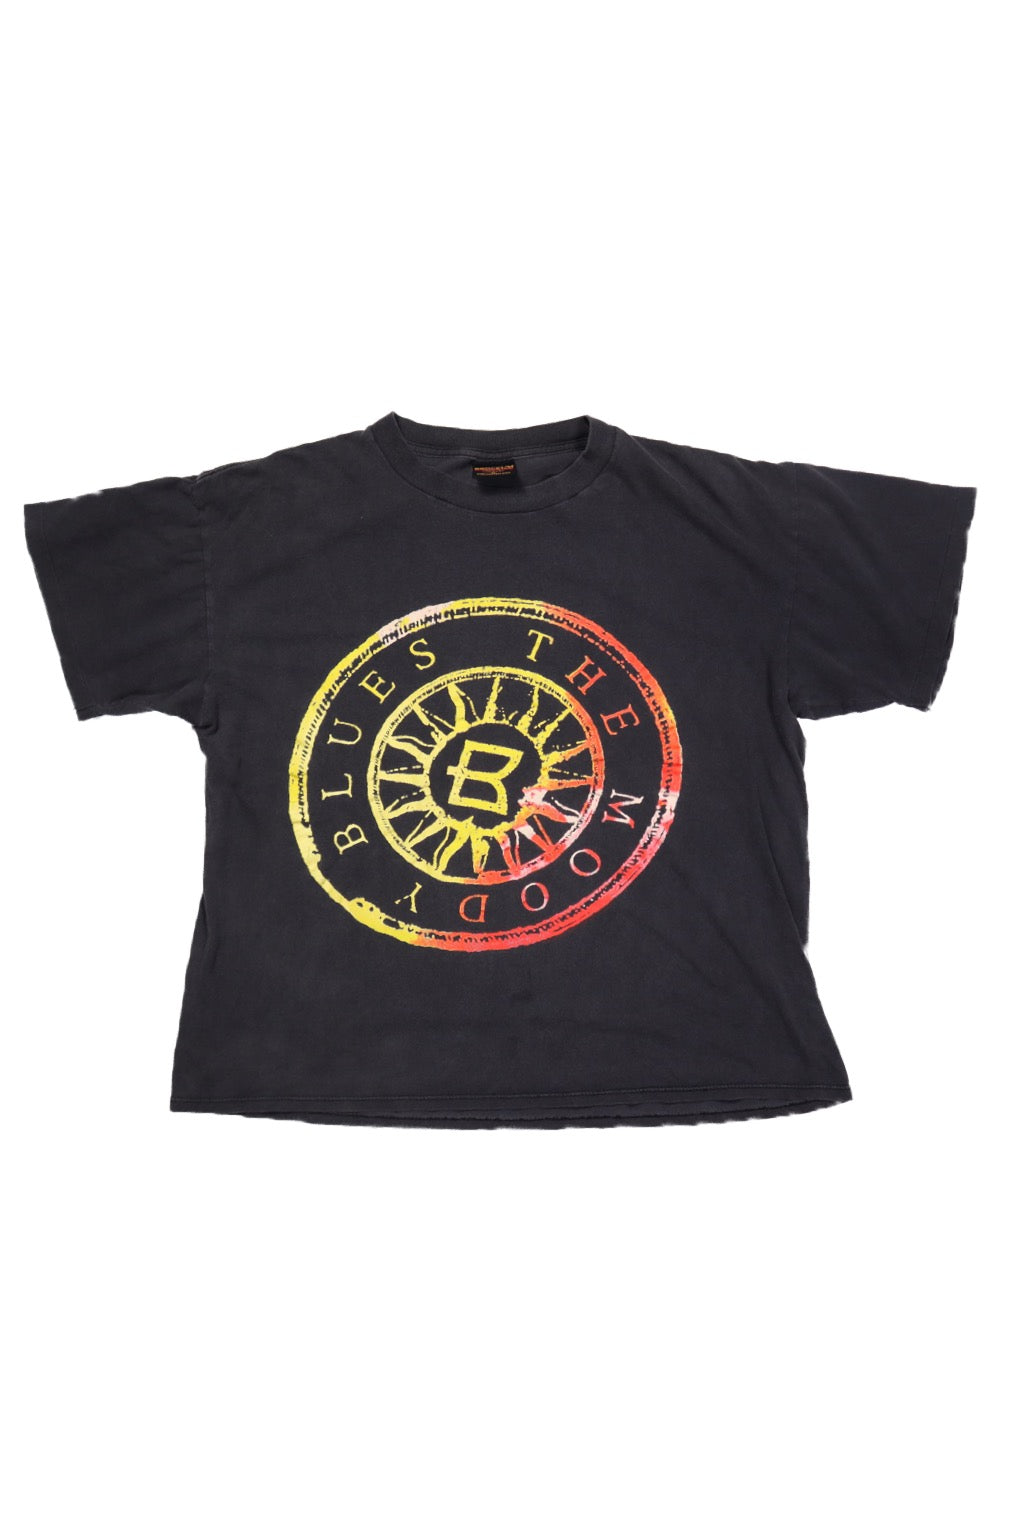 The Moody Blues 1994 T-Shirt Grail (Small)